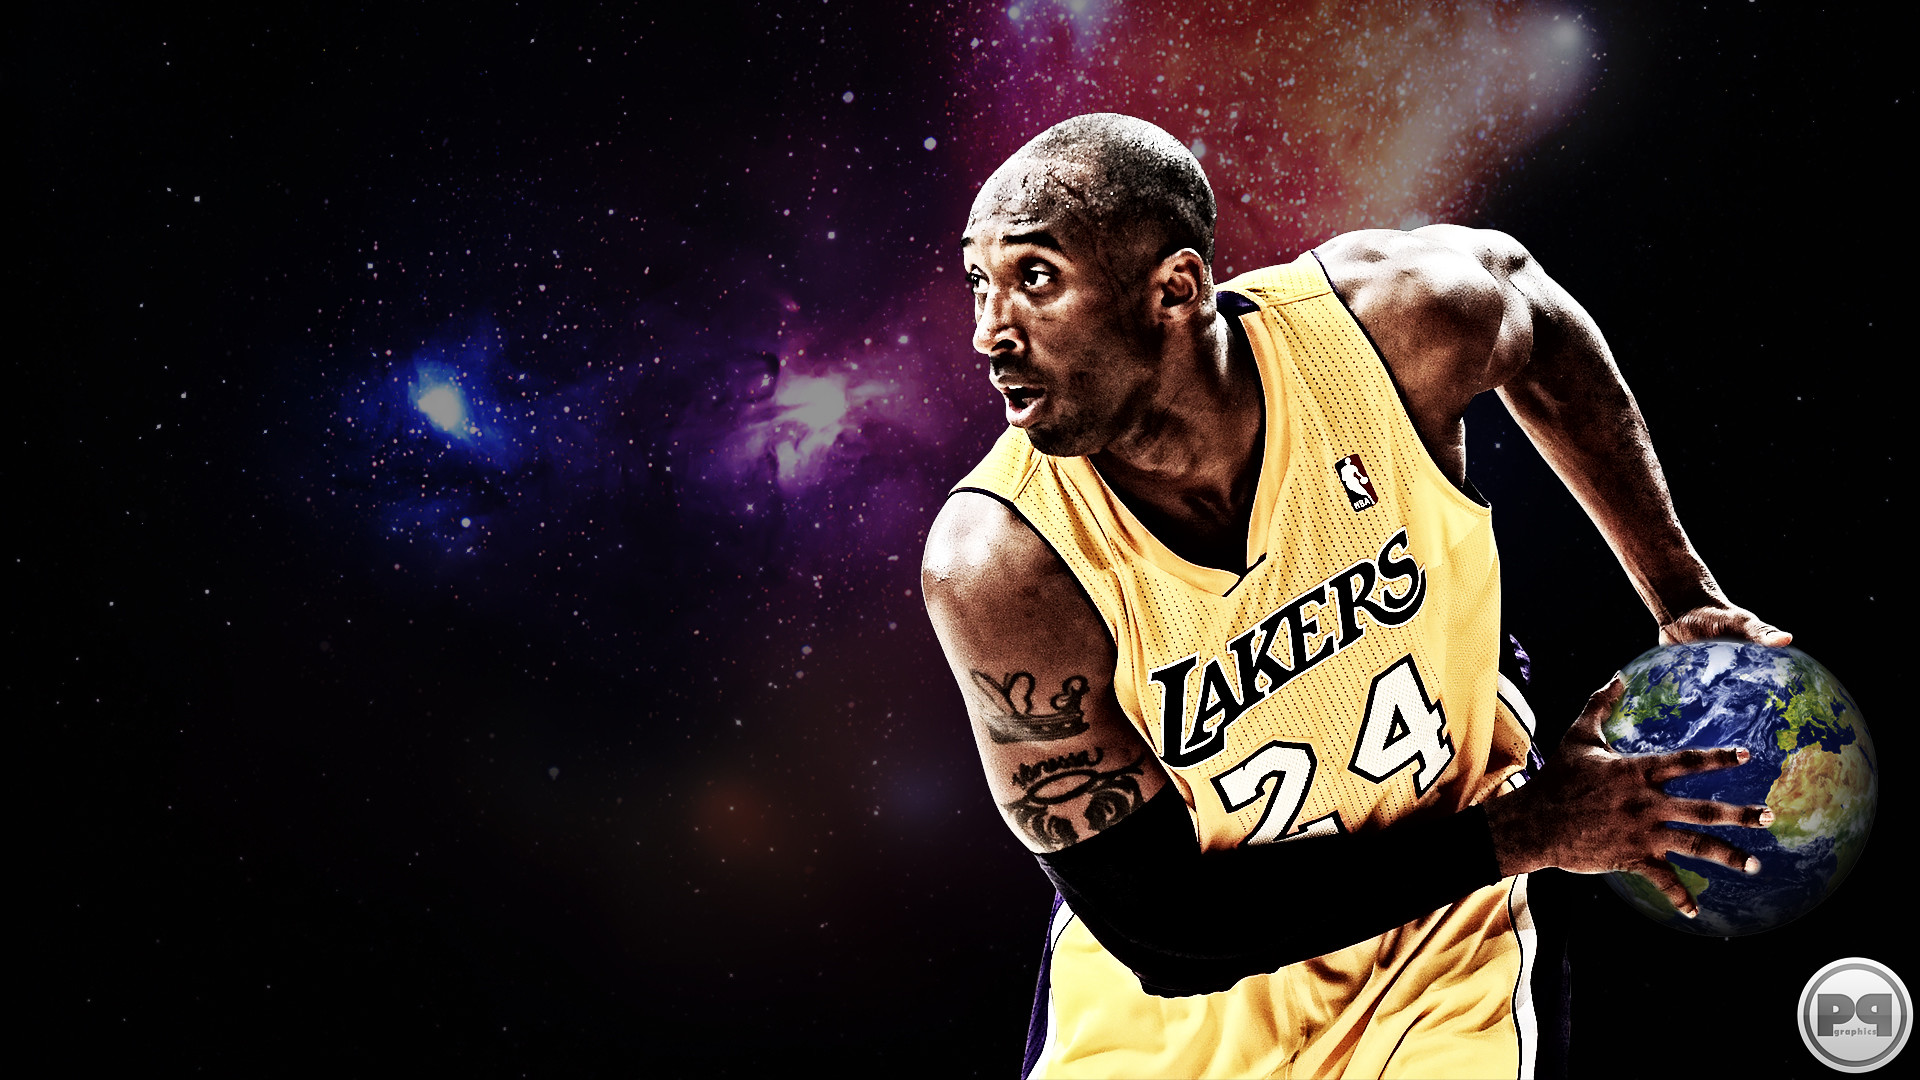 New NBA 2013 Kobe Bryant Los Angeles Lakers basketball wallpaper by  streetball fam member Pavan P